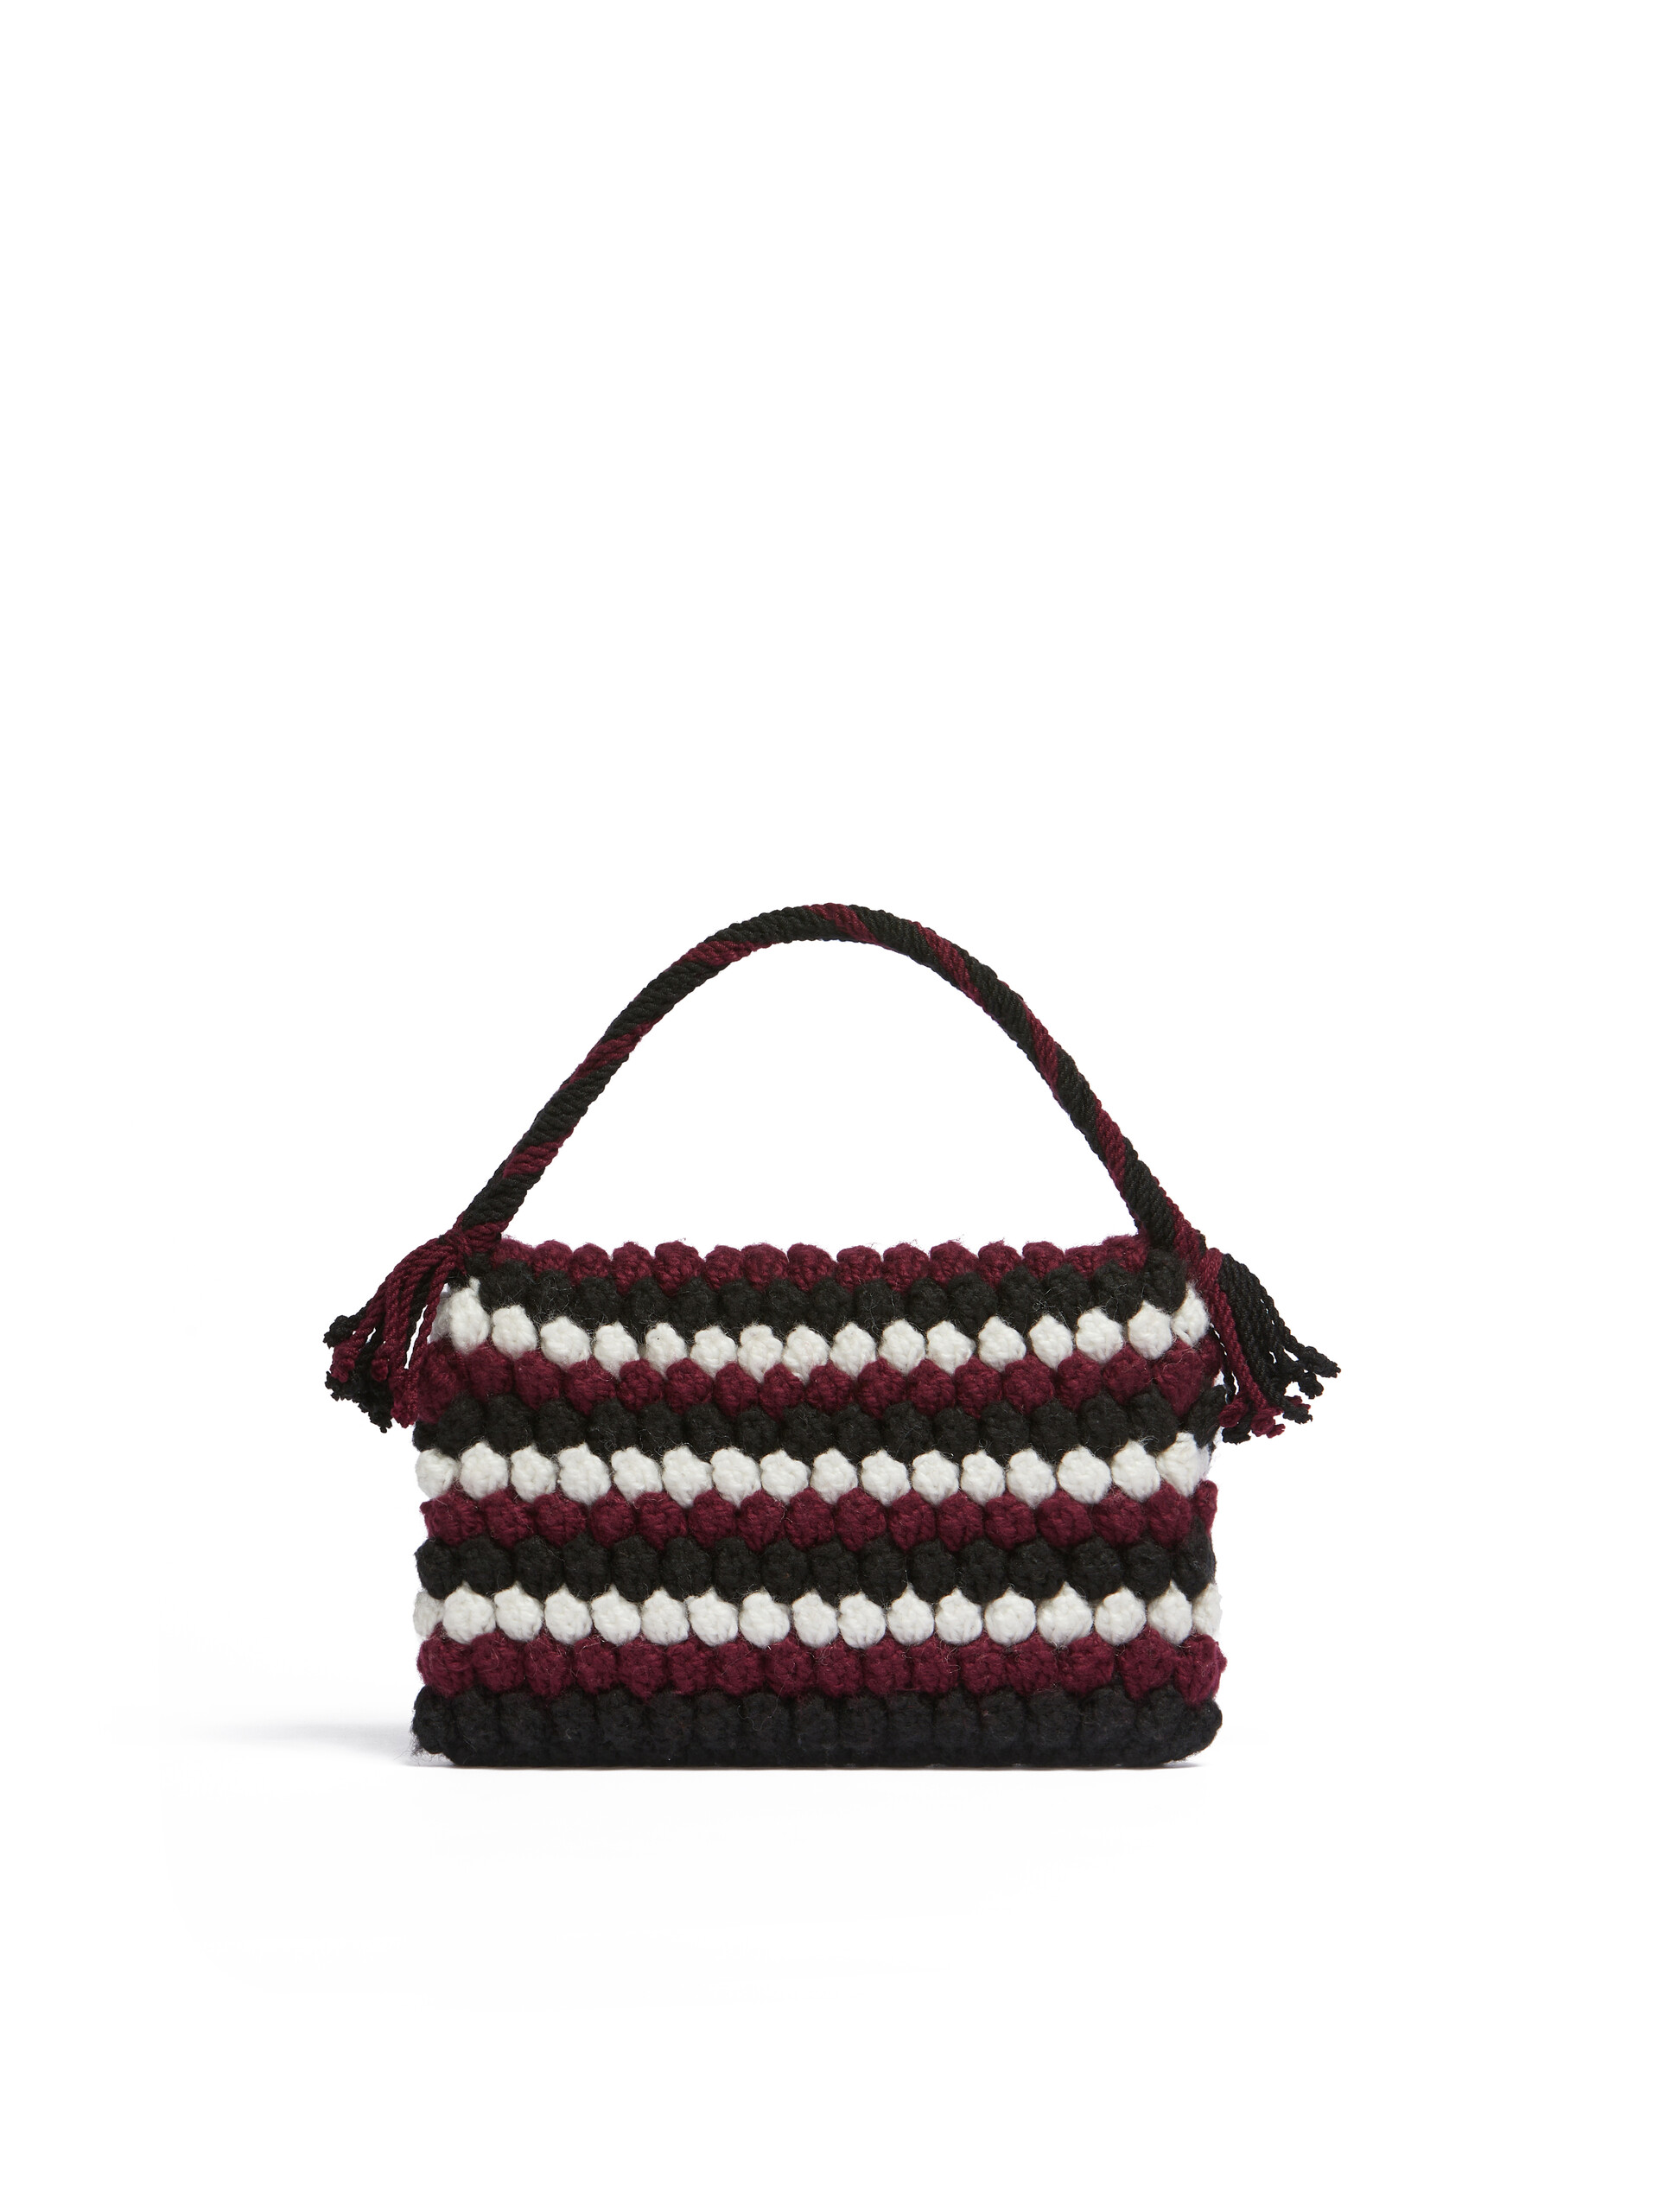 Blue Striped Crochet Marni Market Bread Handbag - Shopping Bags - Image 3